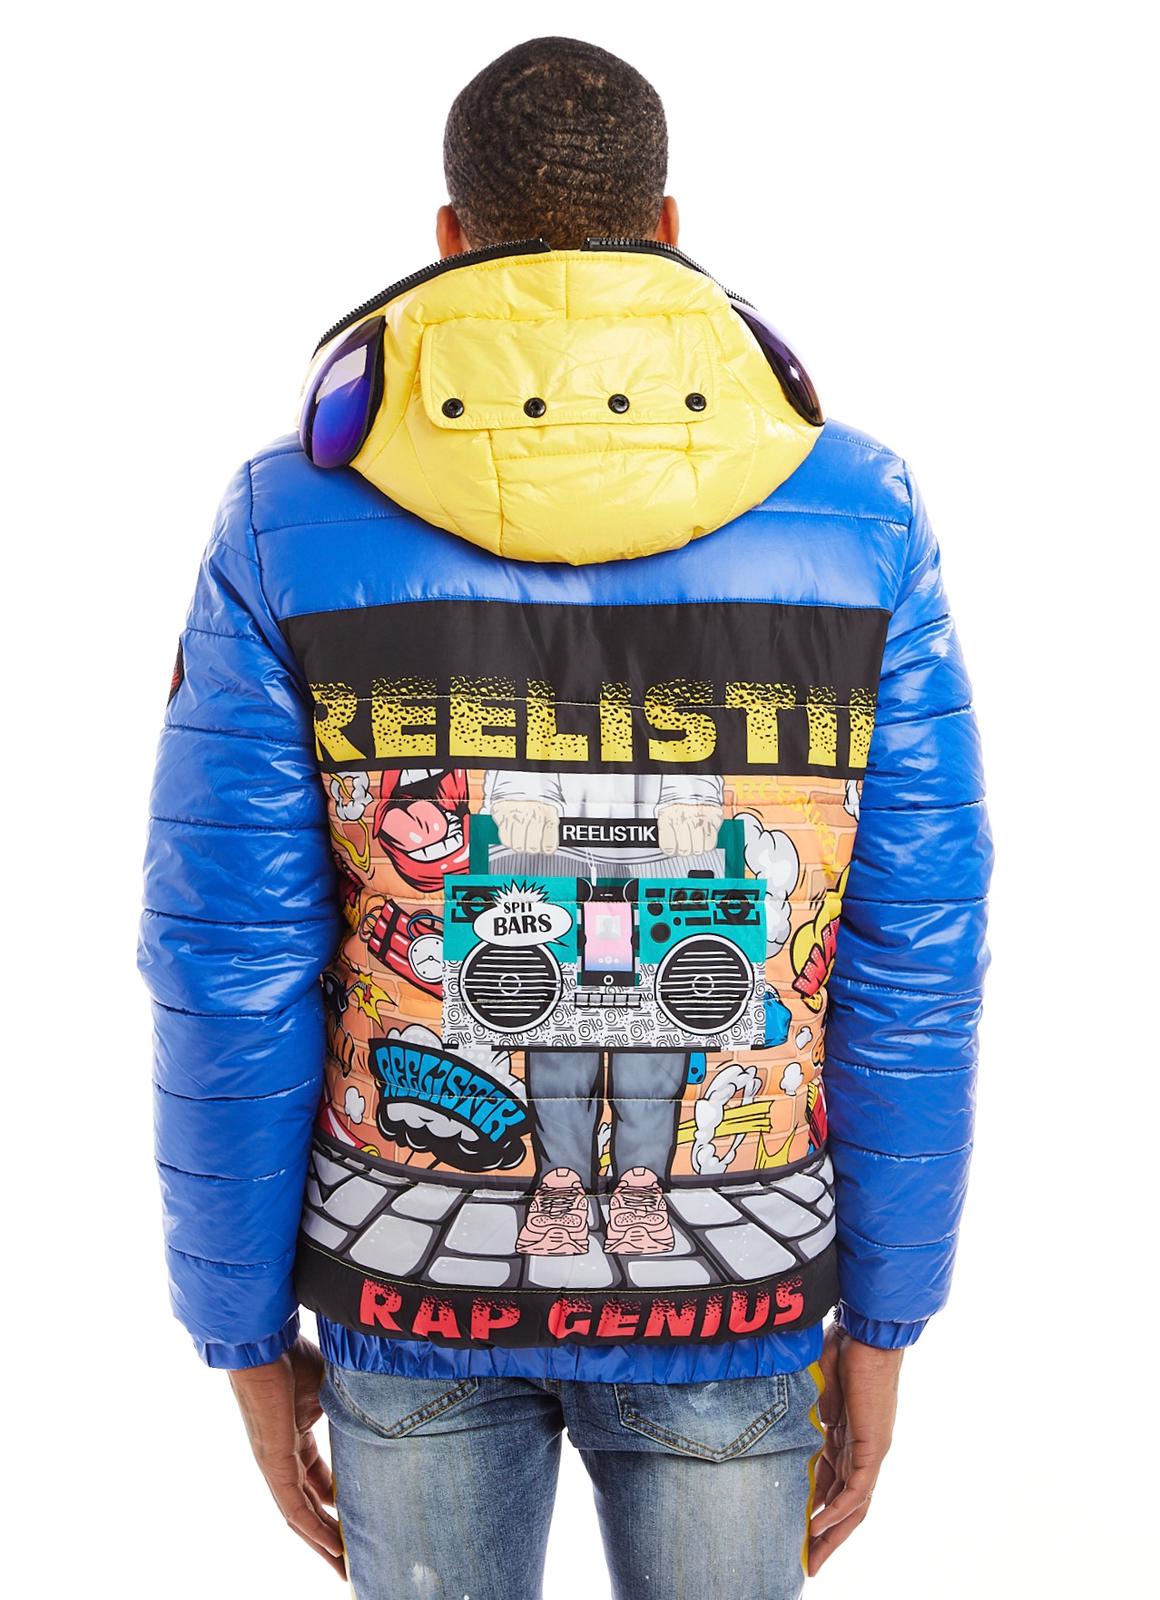 Reelistik-Rap Genius Puffer Jacket-Blue/Yellow